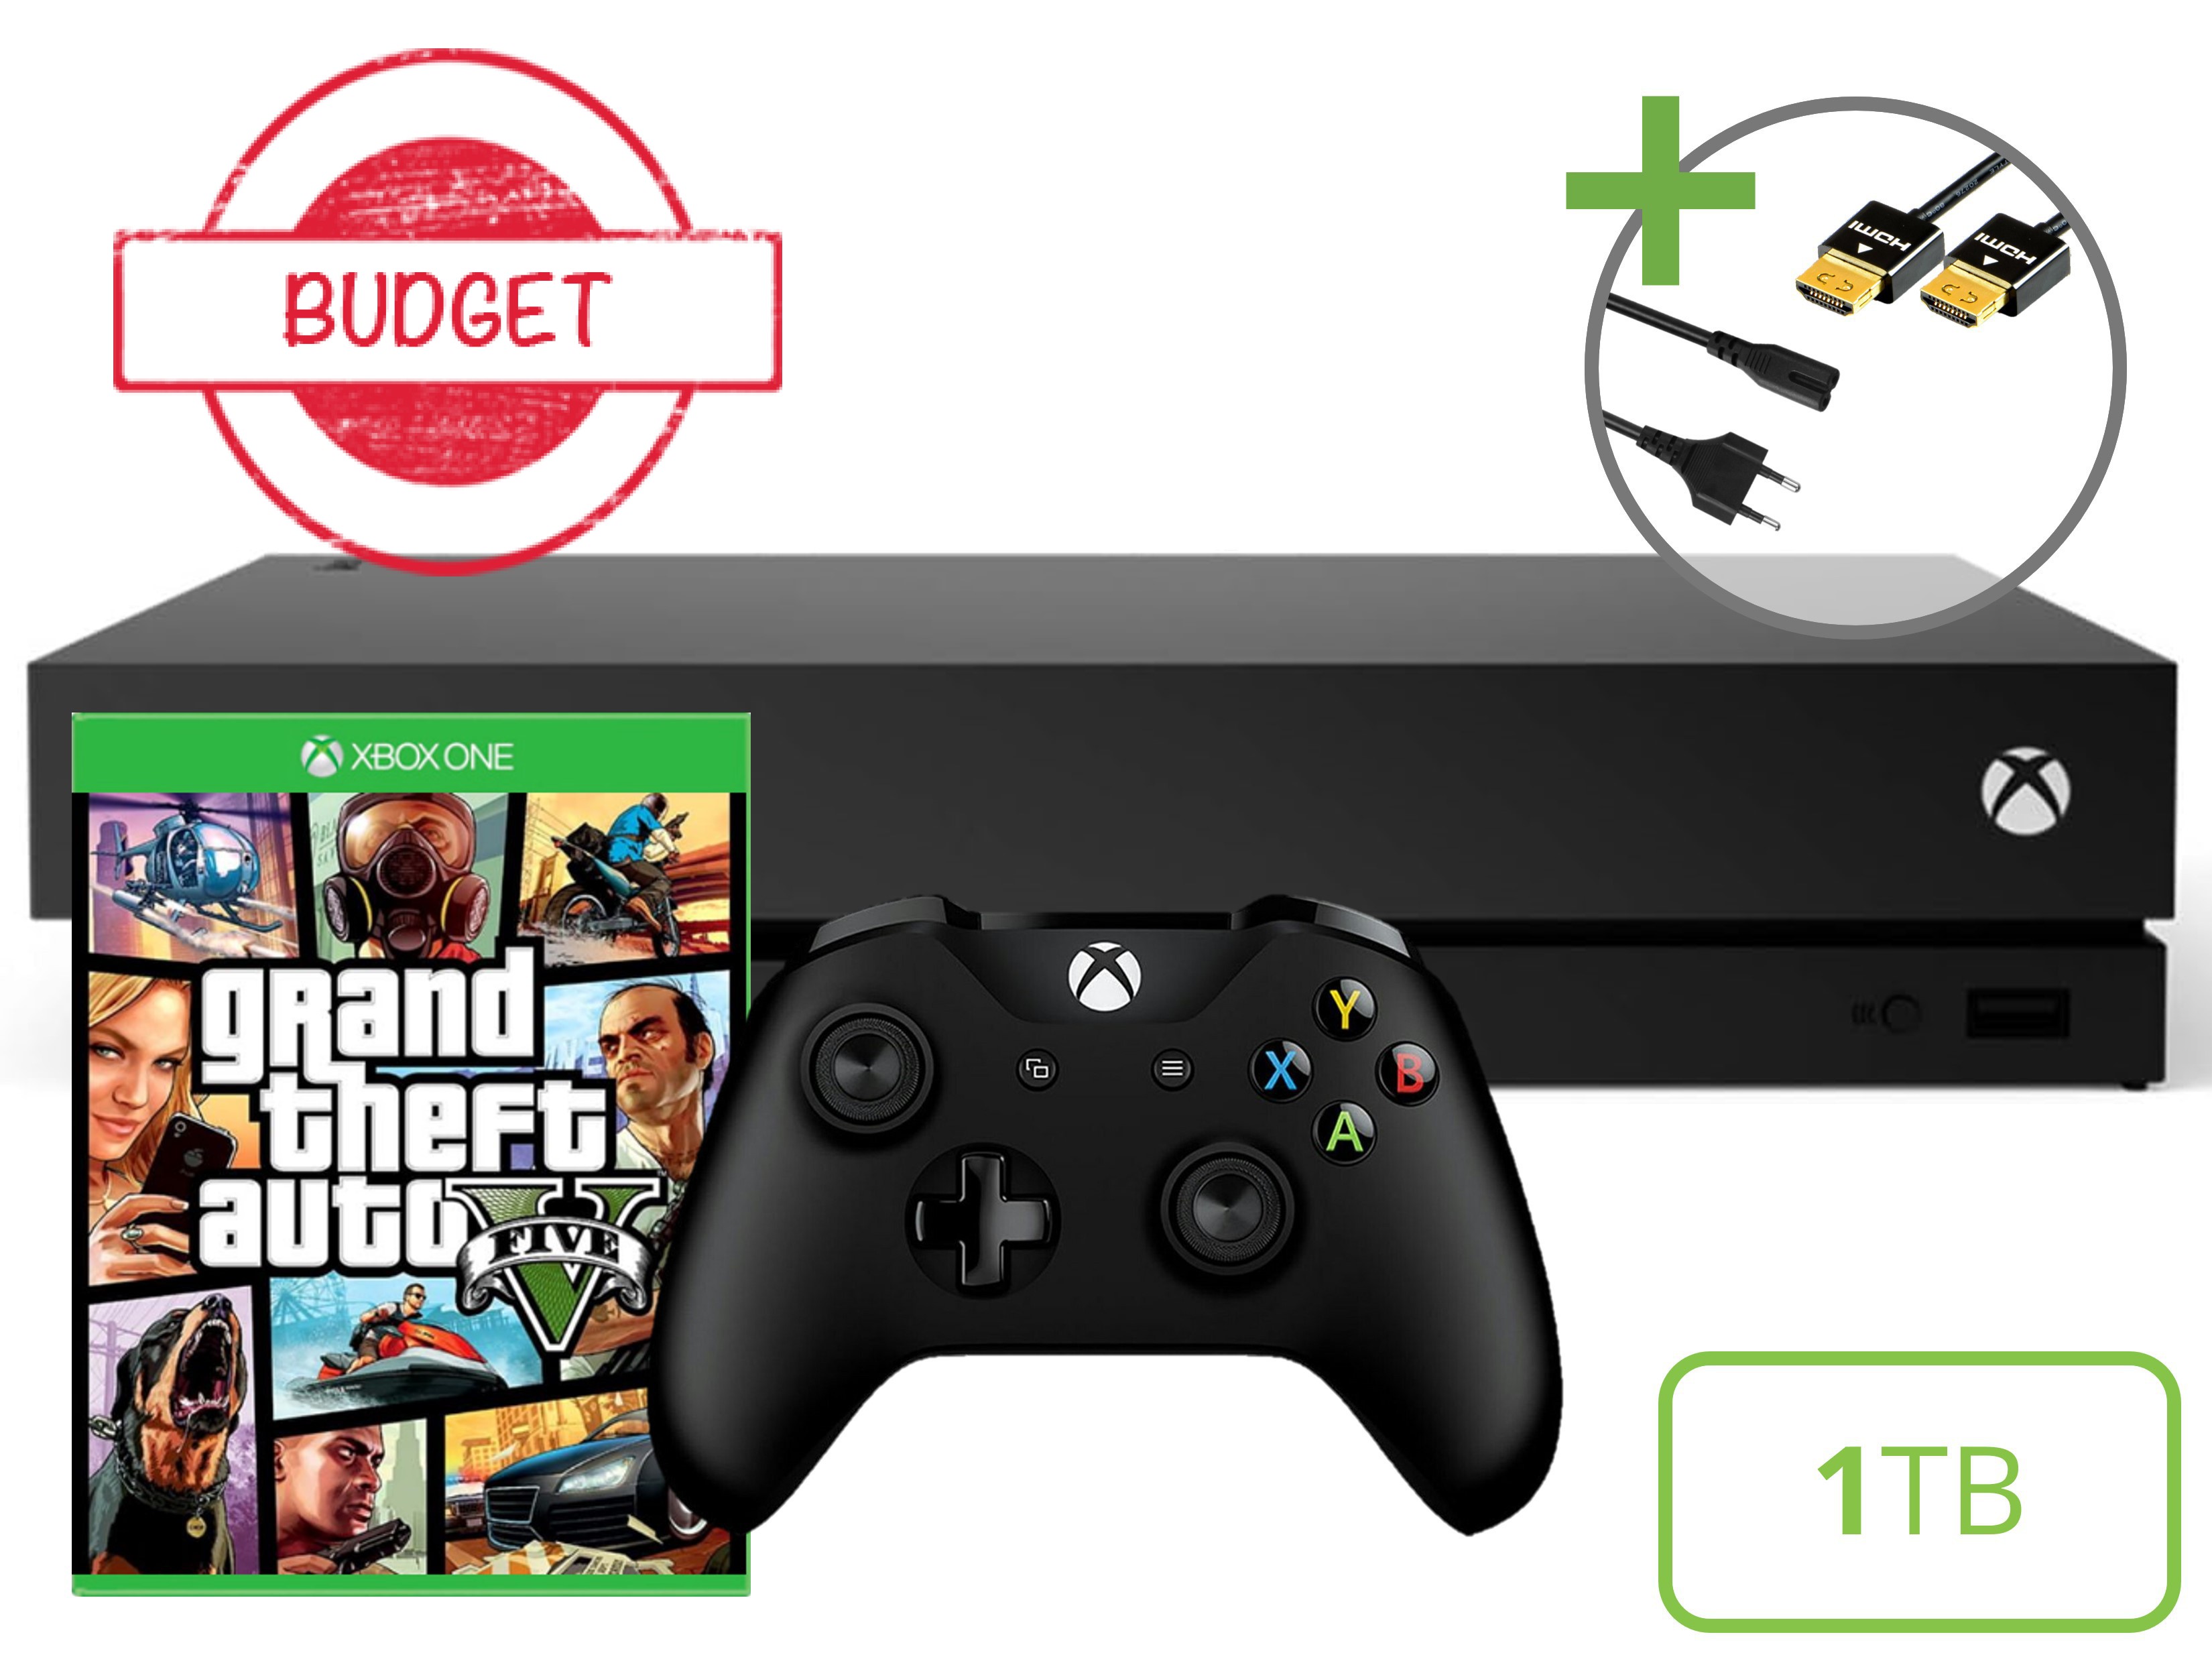 Microsoft Xbox One X Starter Pack - 1TB GTA V Edition - Budget - Xbox One Hardware